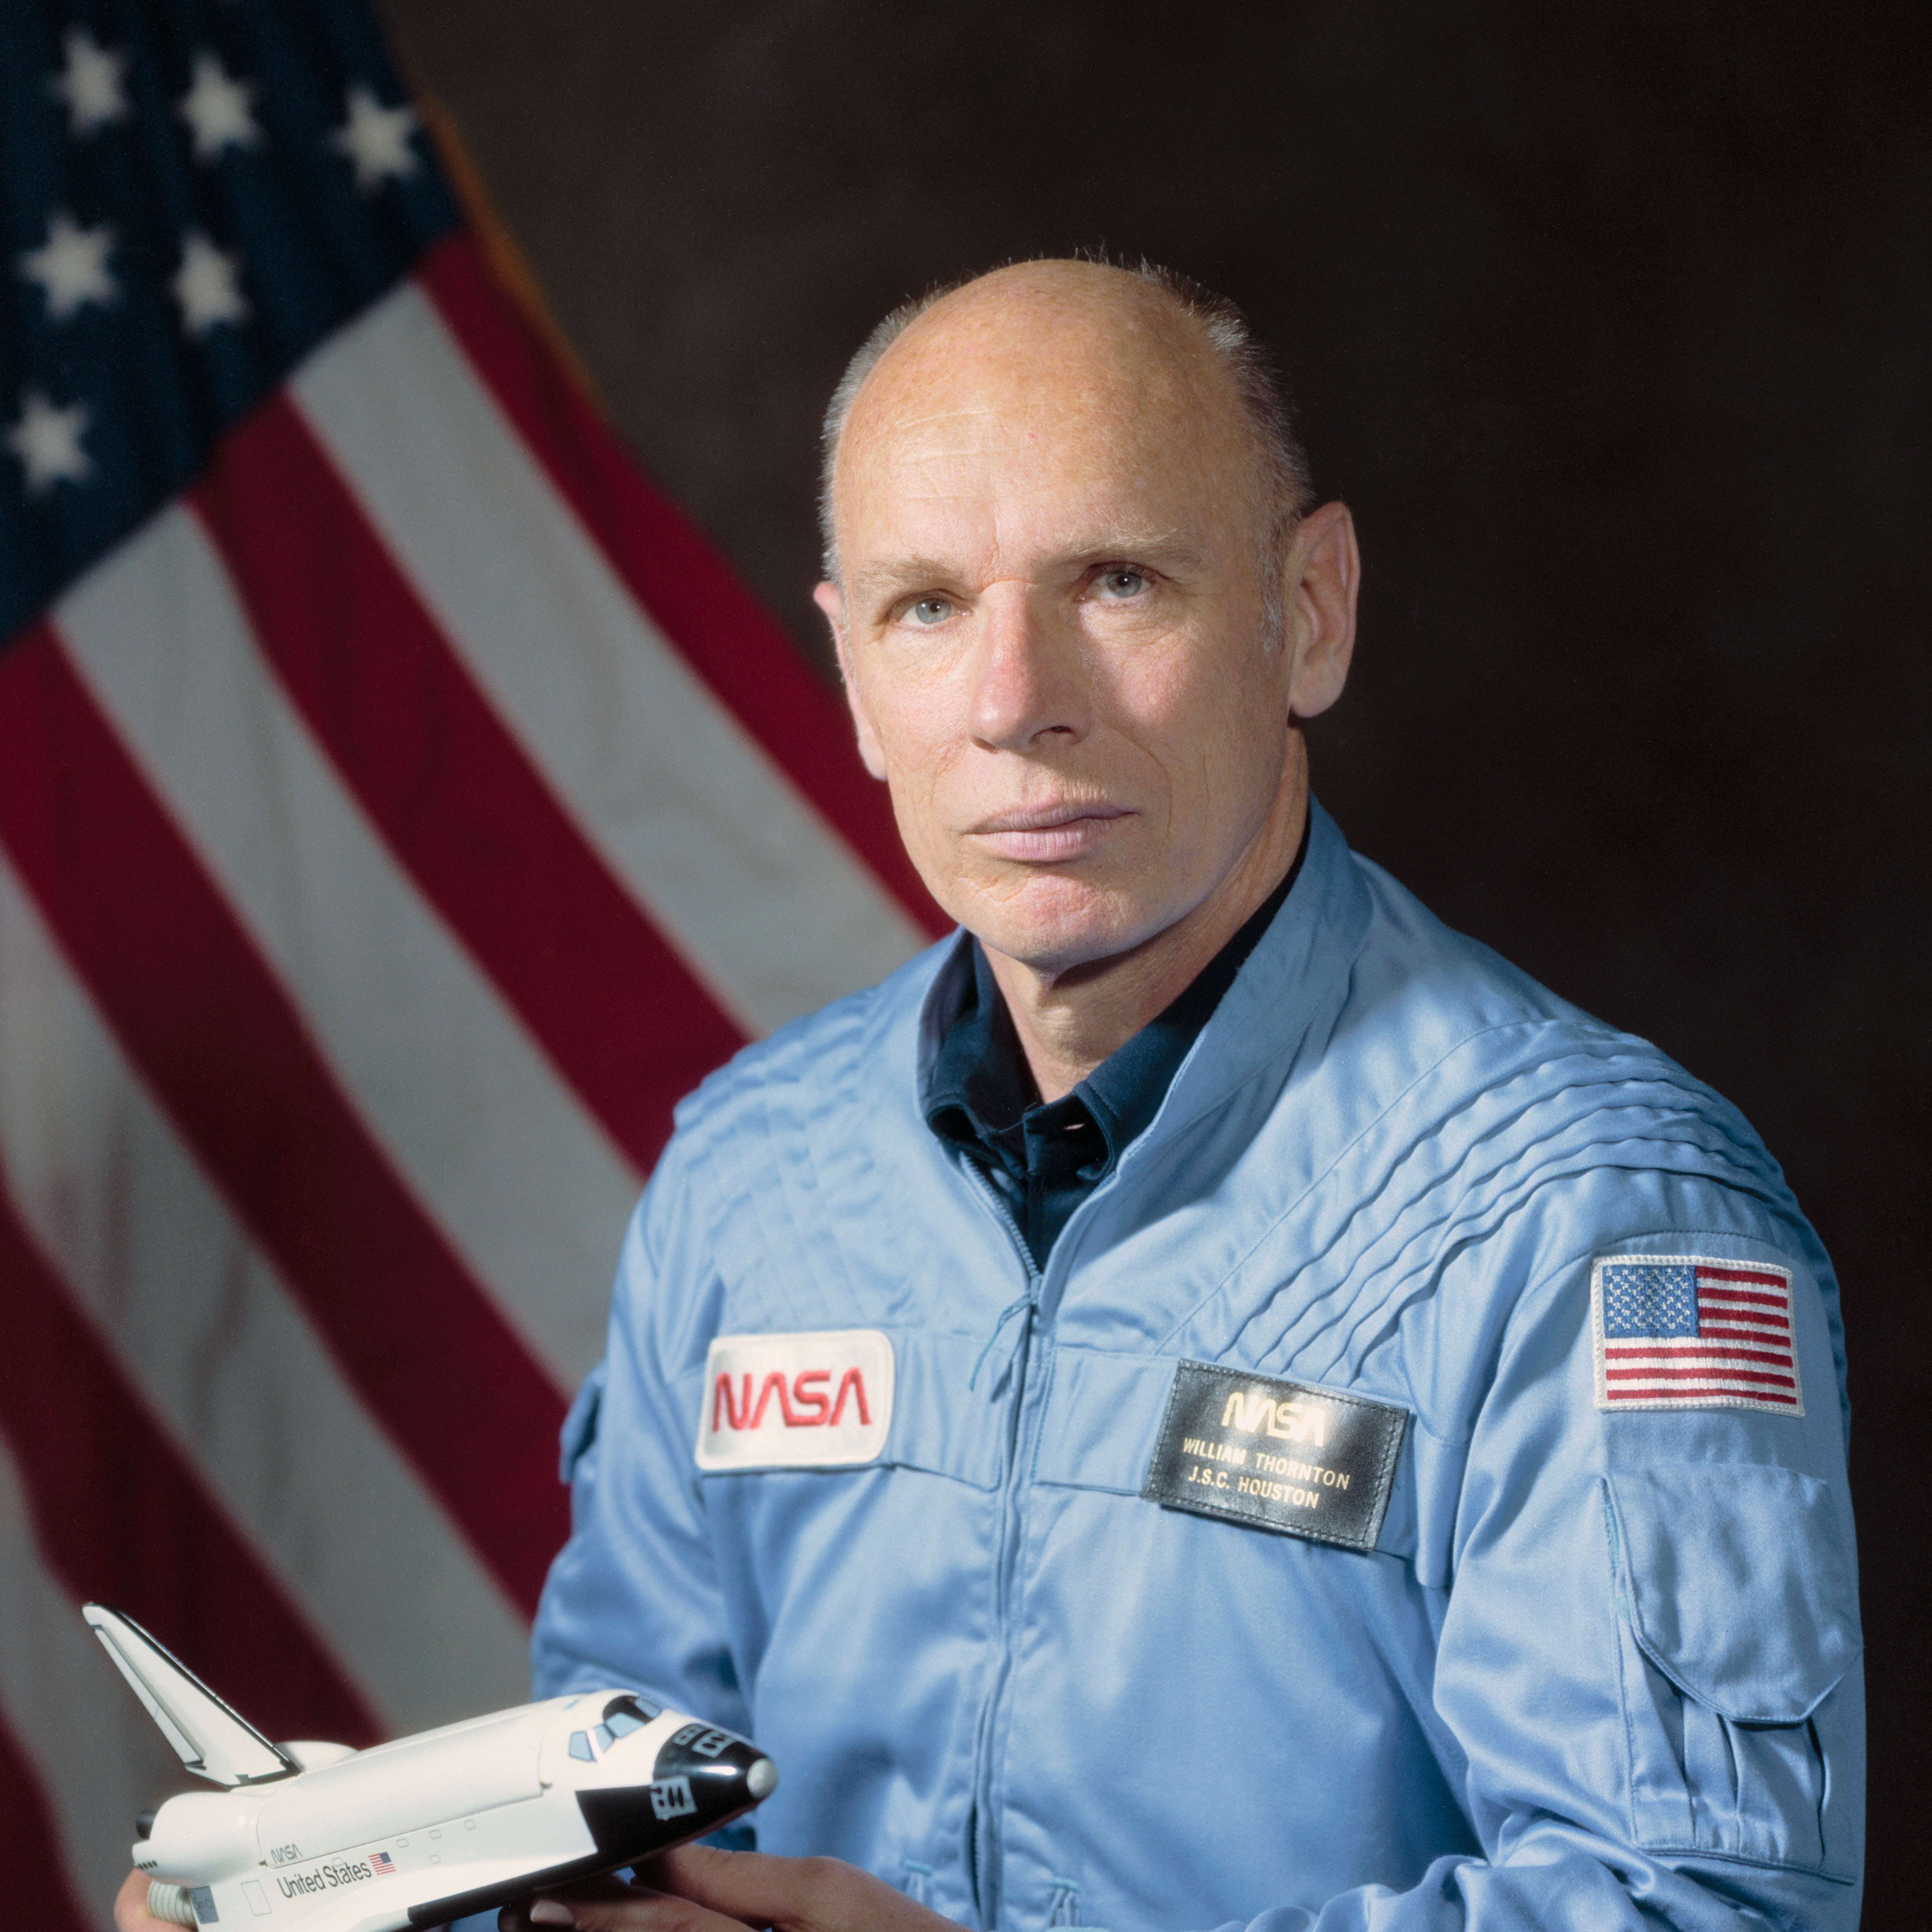 Space Shuttle Mission Specialist William Thornton